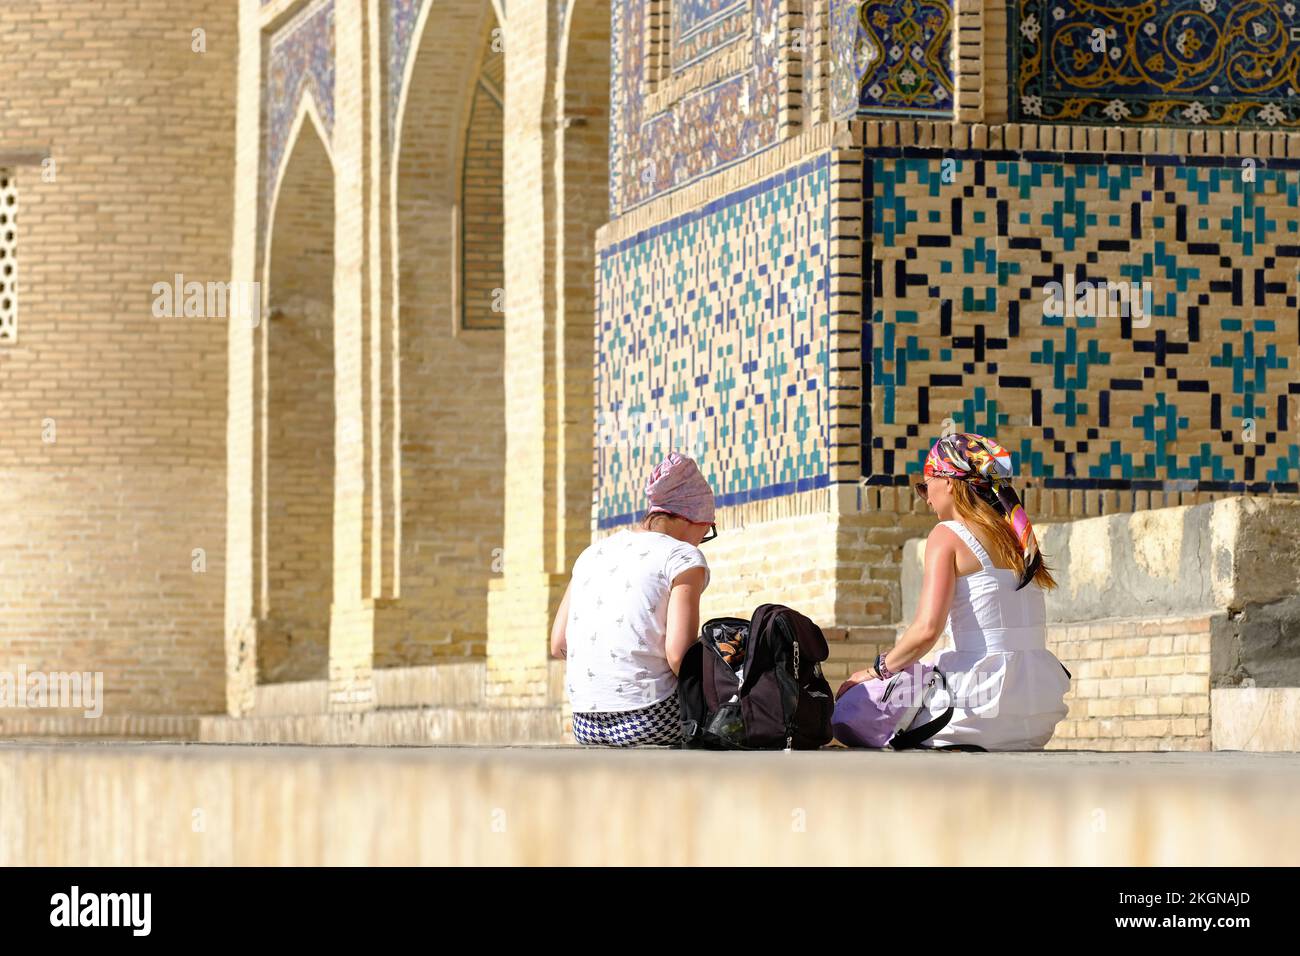 Bukhara Uzbekistan twofemale visitors rest outside the Mir-i Arab Madrasa and its ornate tile decoration - August 2022 Stock Photo